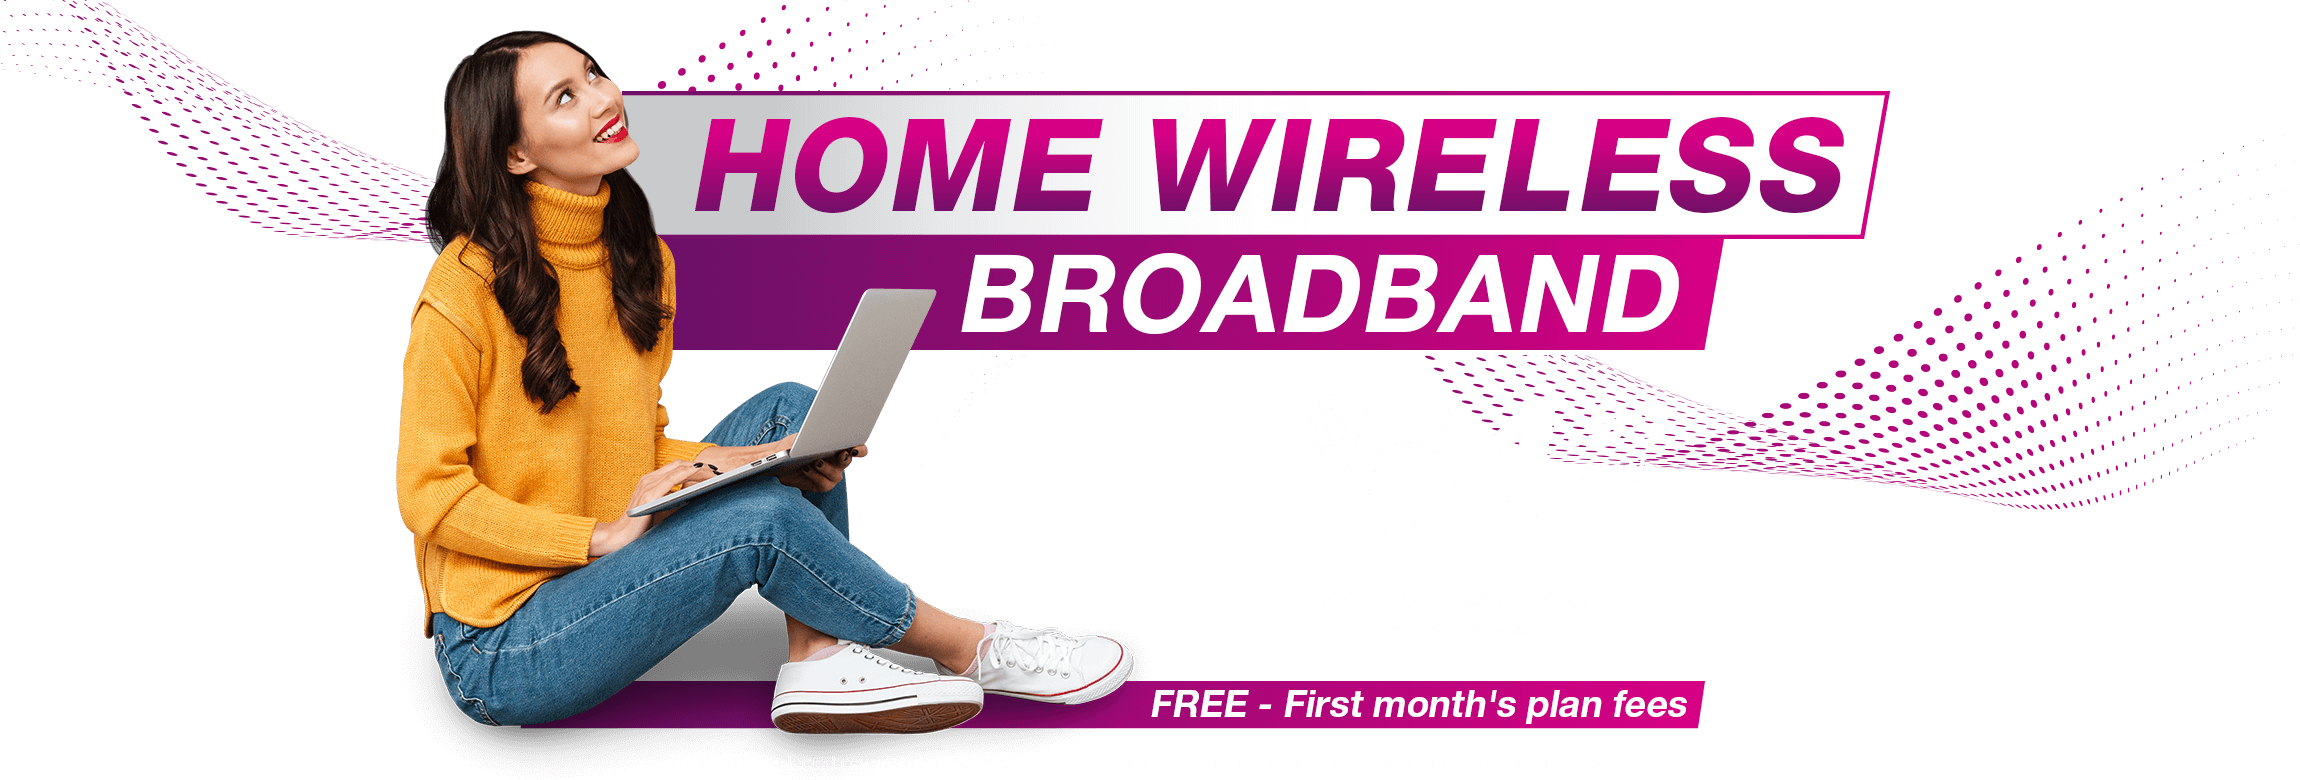 Home Wireless Broadband Plan $54.99/mth